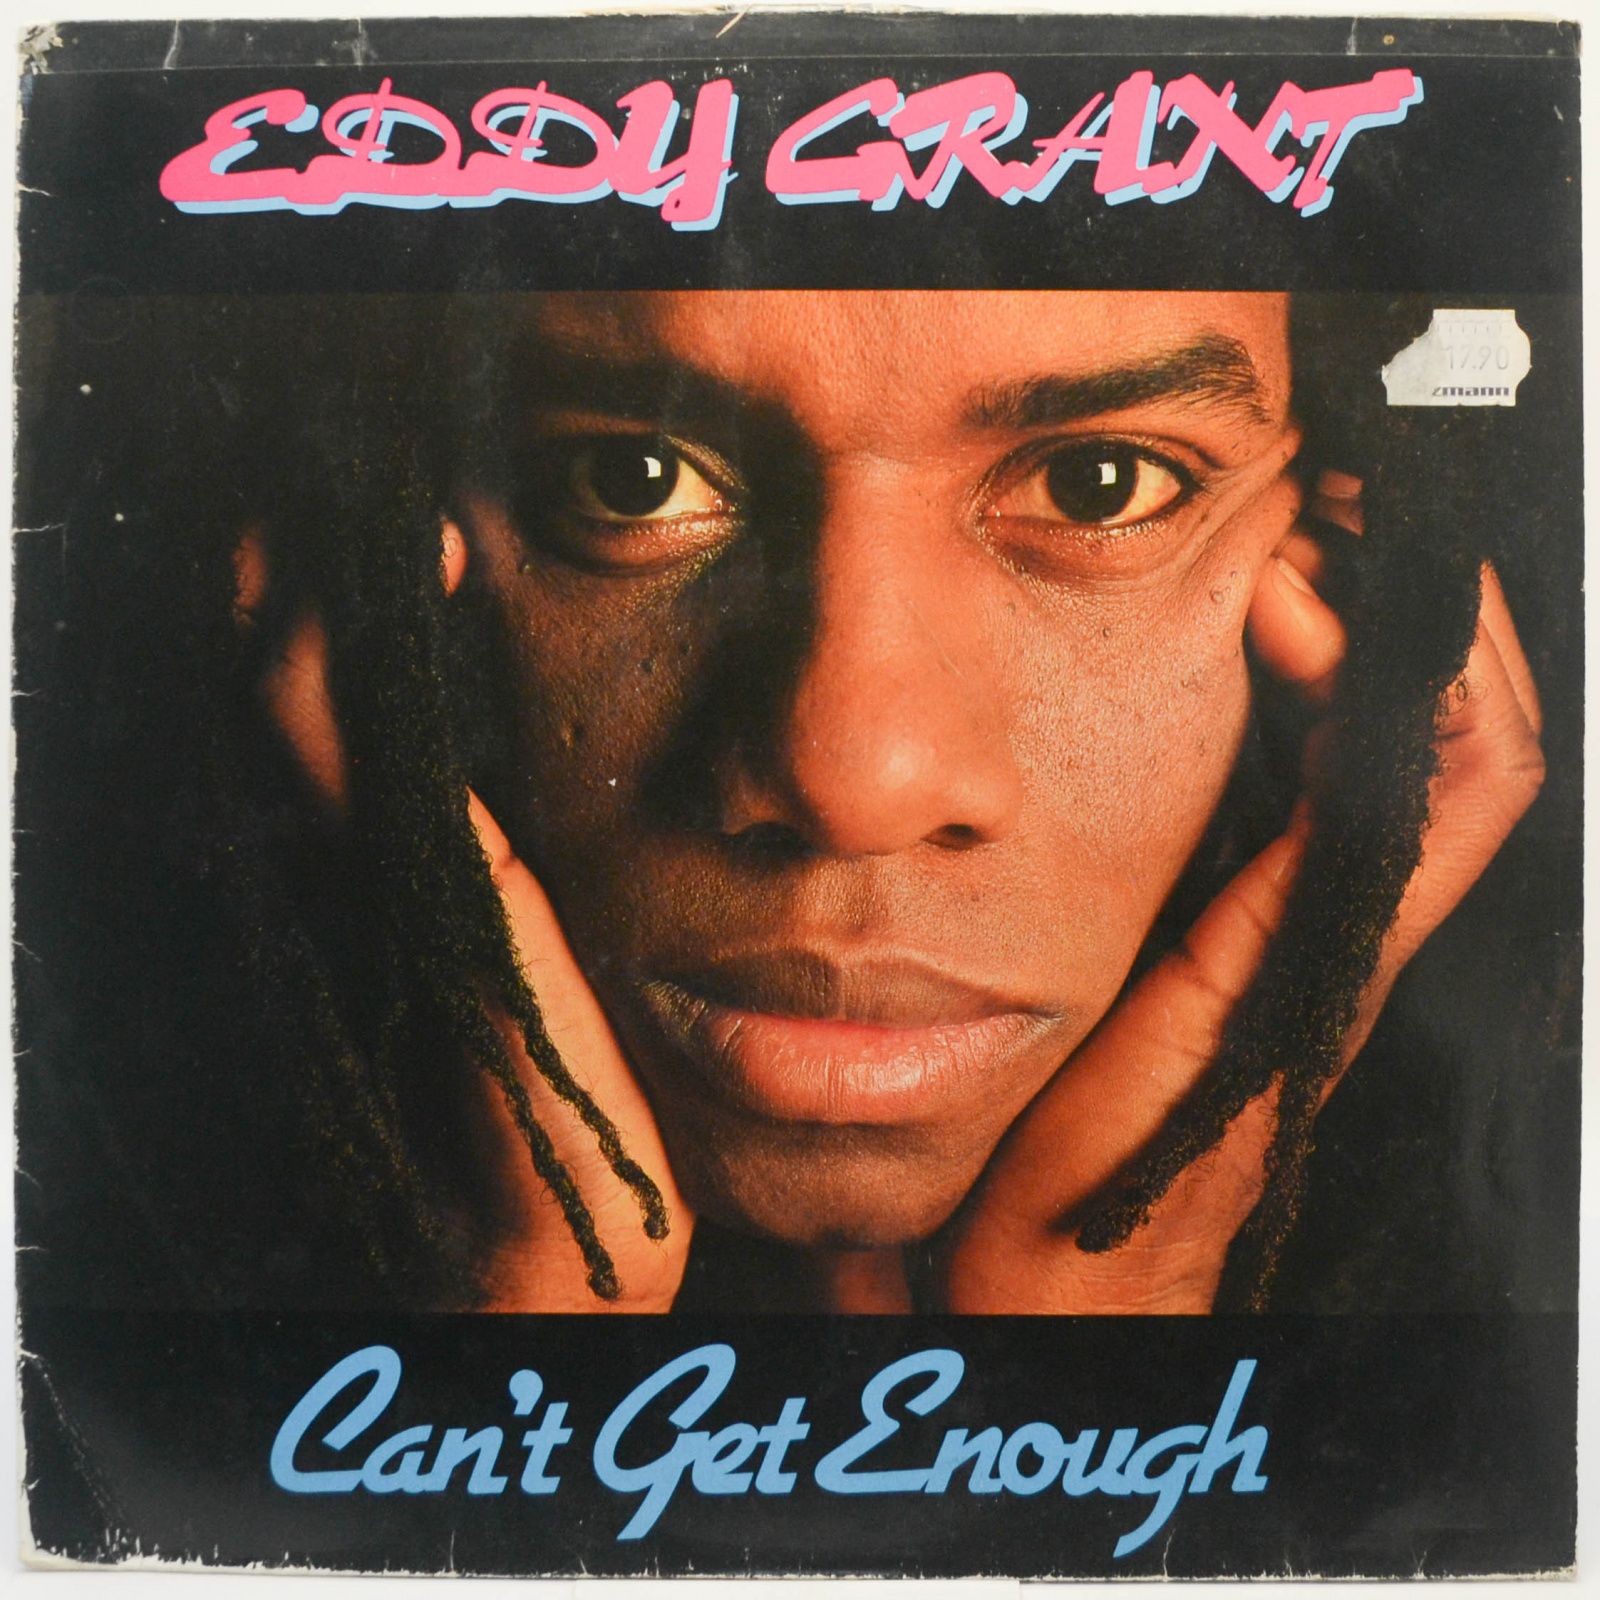 Eddy grant electric. Эдди Грант. Eddy Grant – can't get enough. Eddy Grant 1982. Грант обложка.